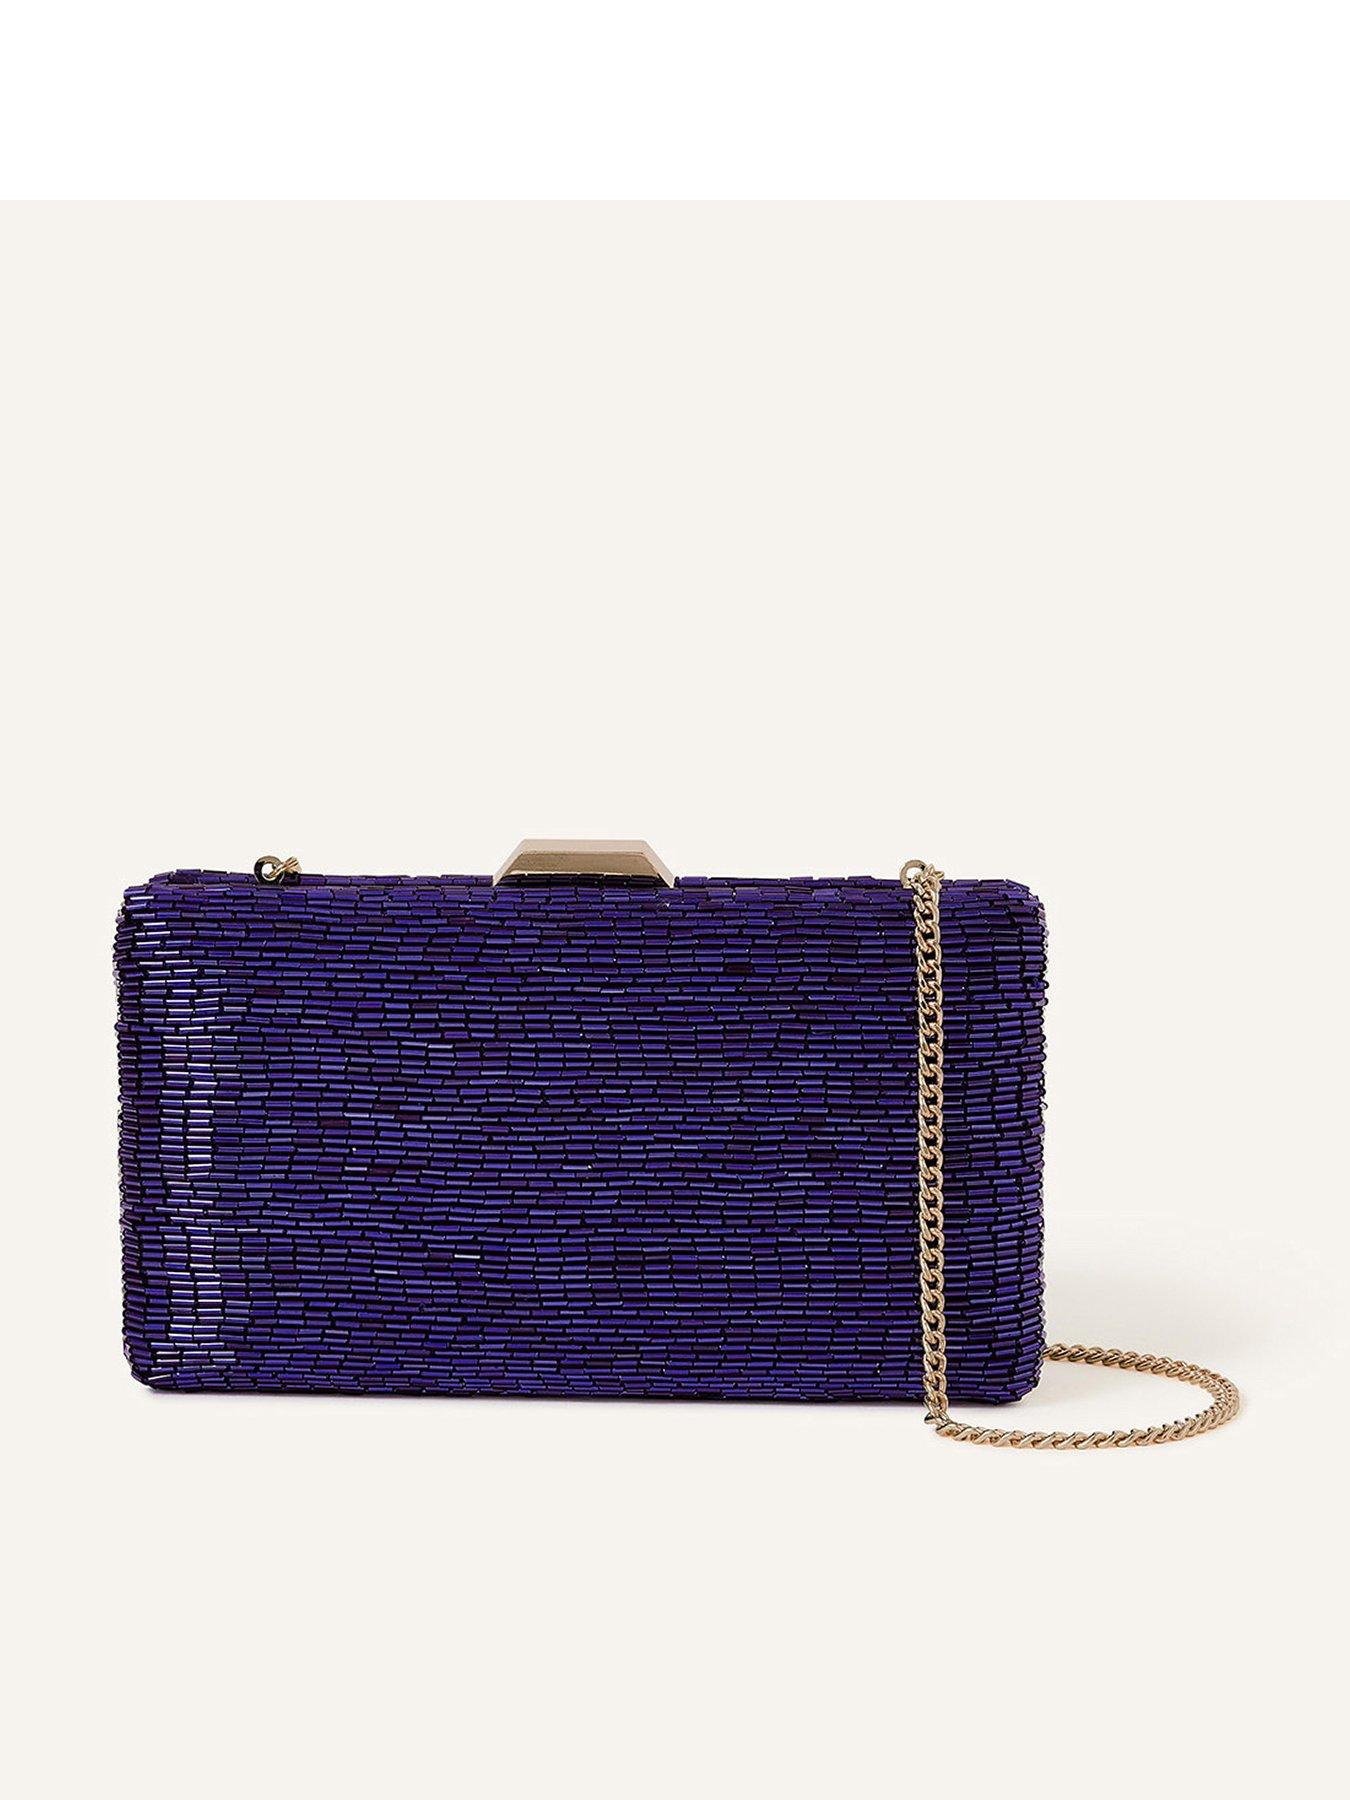 Aelia, Our Iconic Clutch Bag (Royal Blue), Hard-Case Clutch Purse